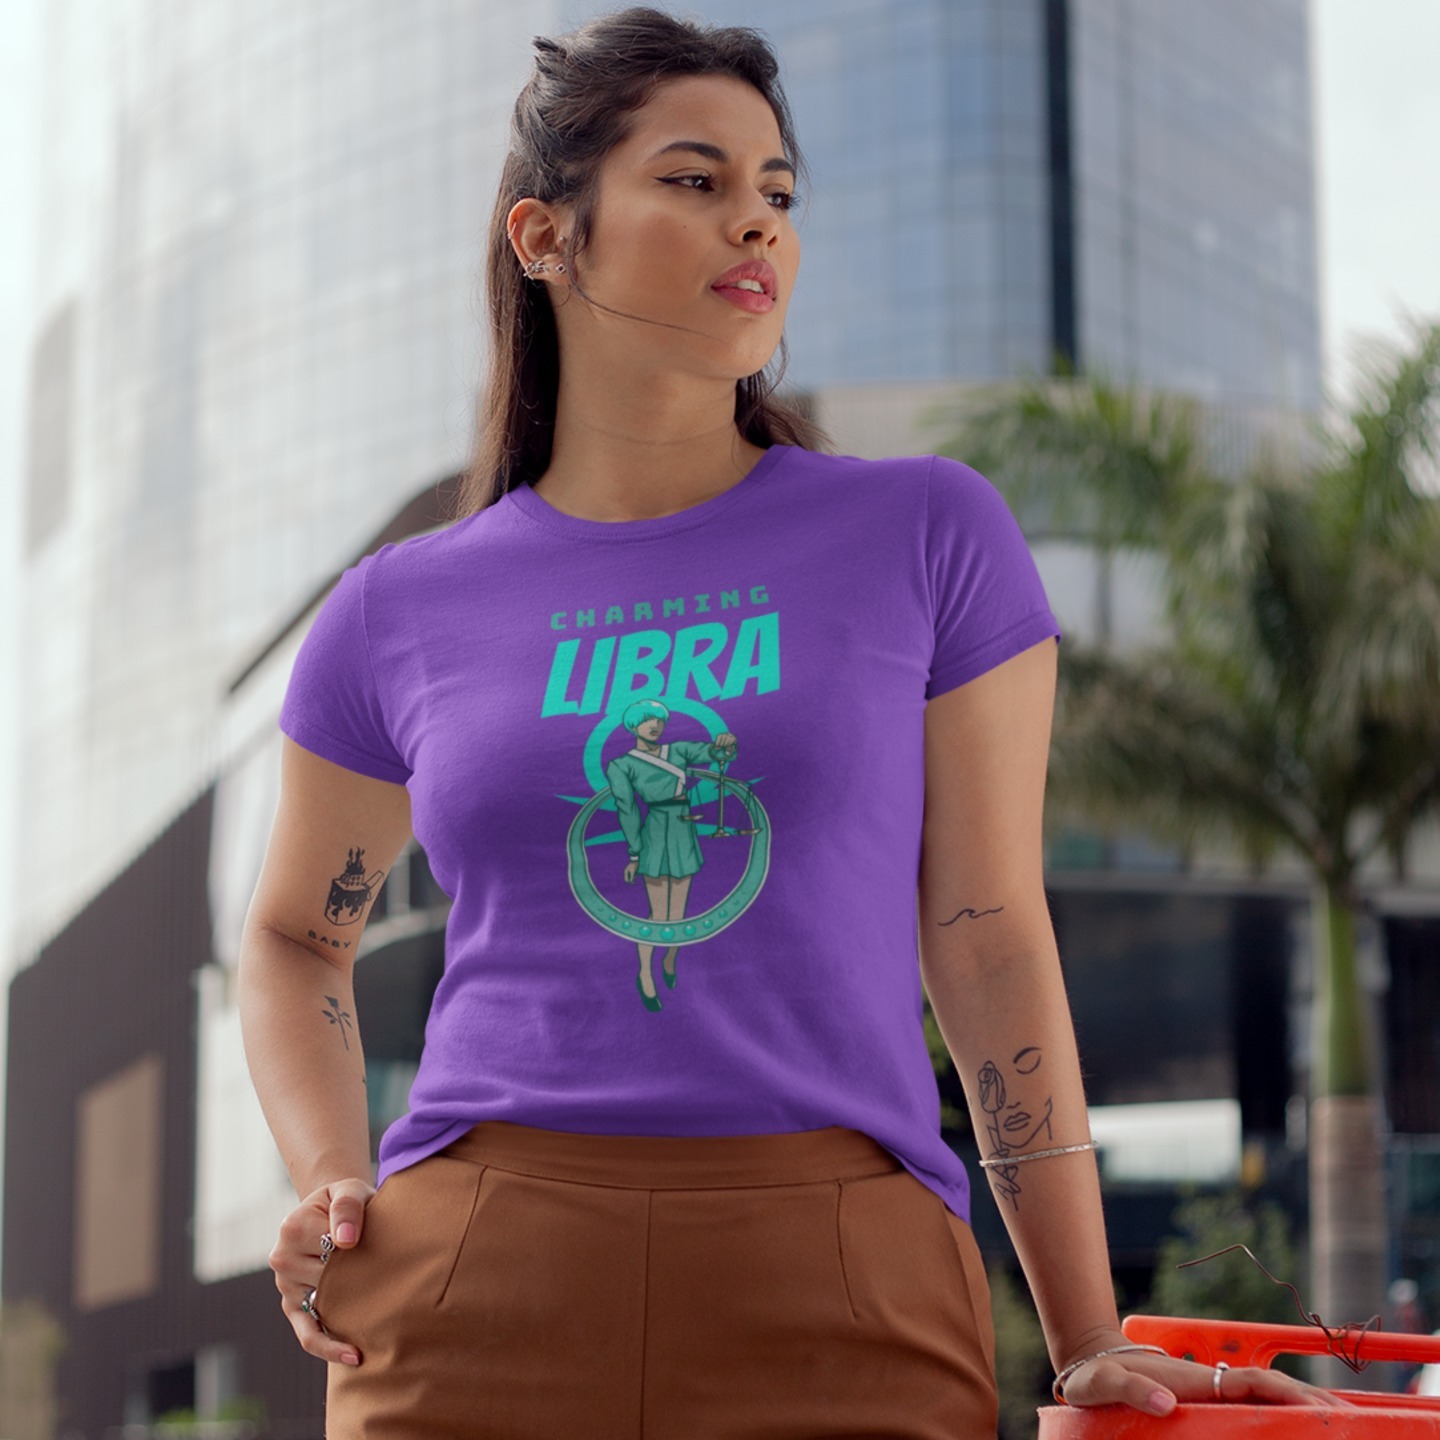 Libra - Charming T-shirt